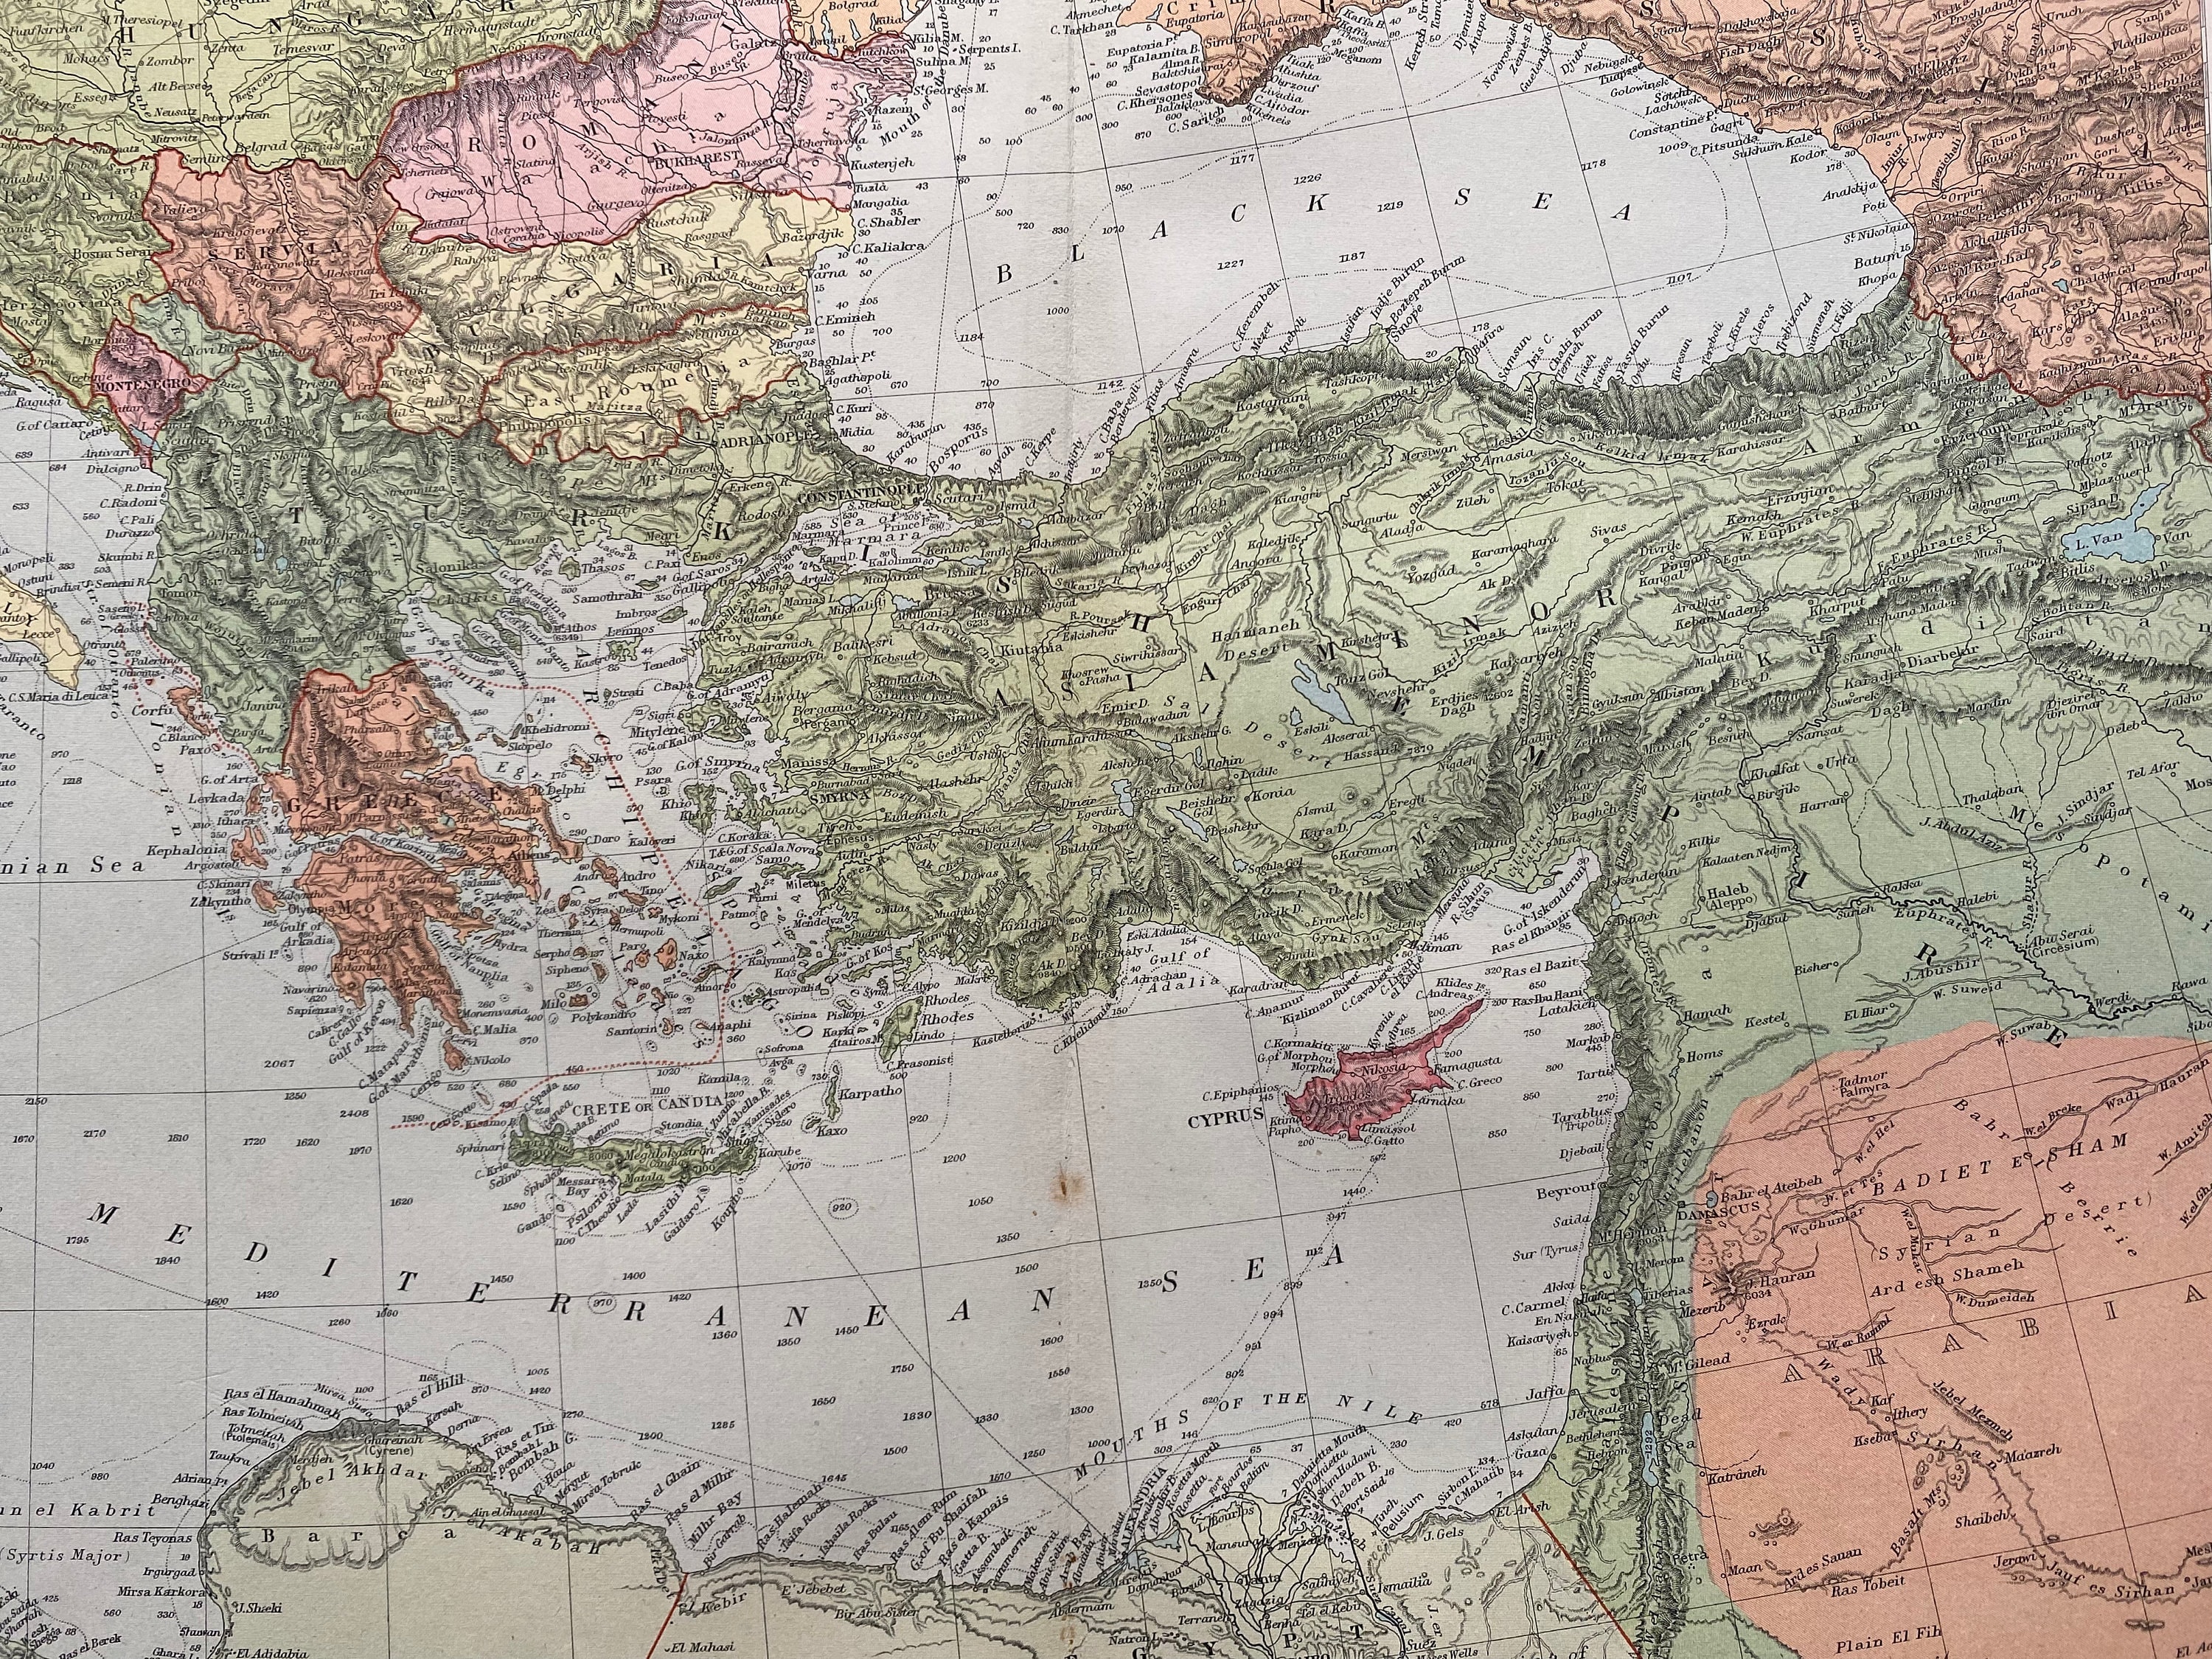 Marmaris Turkey Map Art Print Many Styles 350gsm Art 